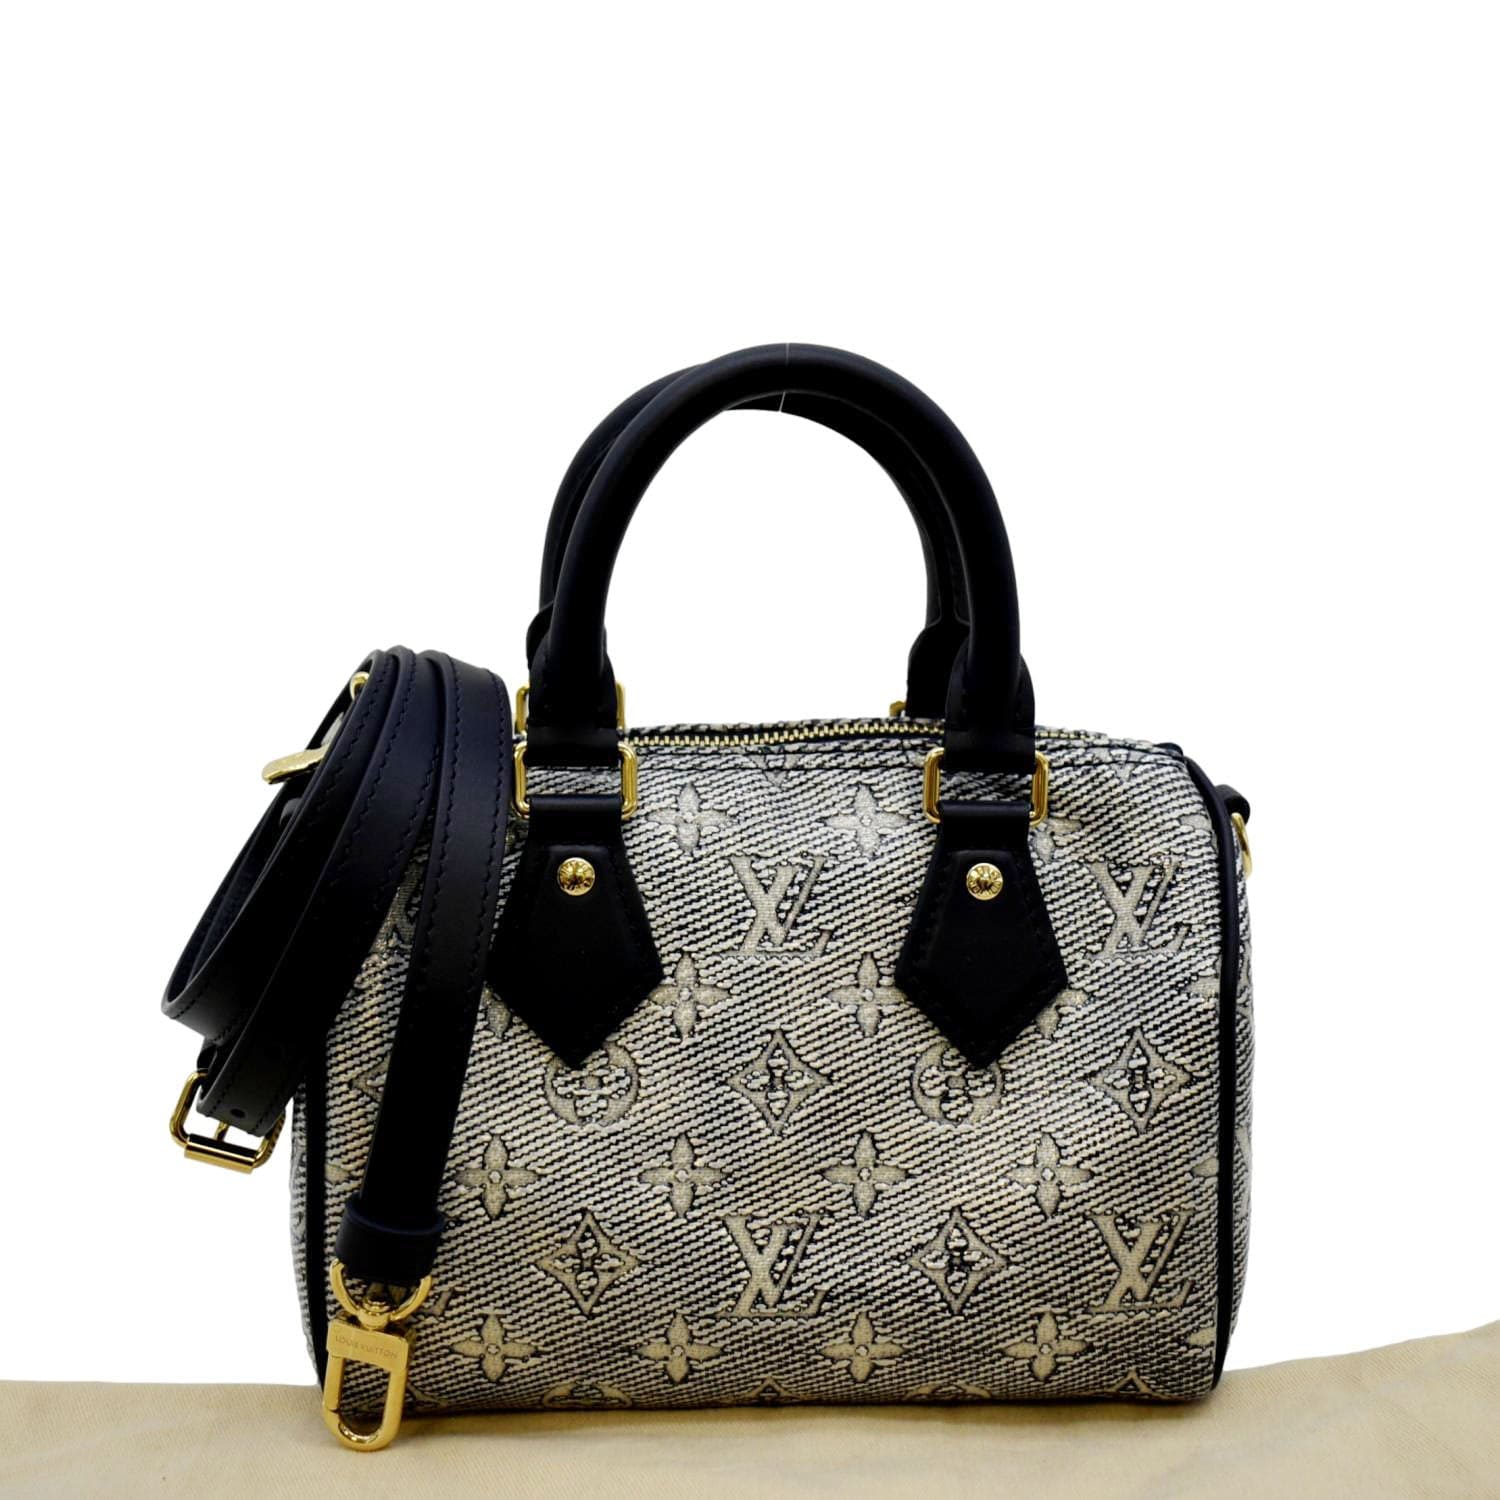 Louis Vuitton Speedy Bandoulière 20 Handbag